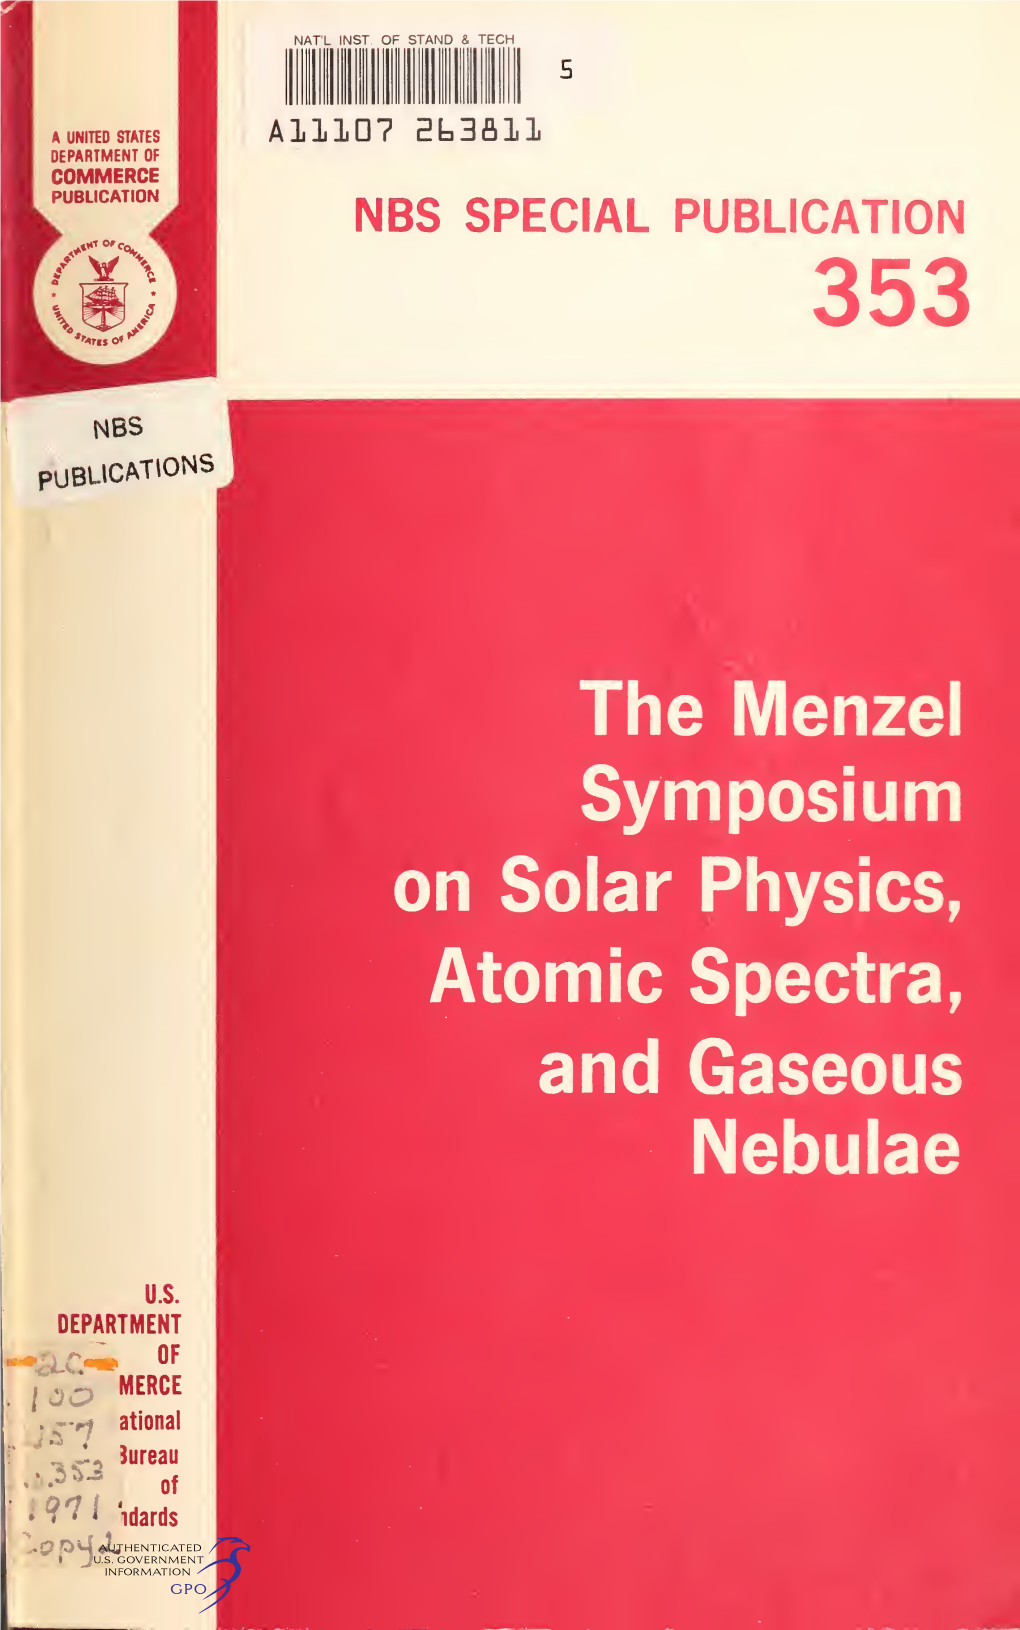 The Menzel Symposium on Solar Physics, Atomic Spectra, and Gaseous Nebulae